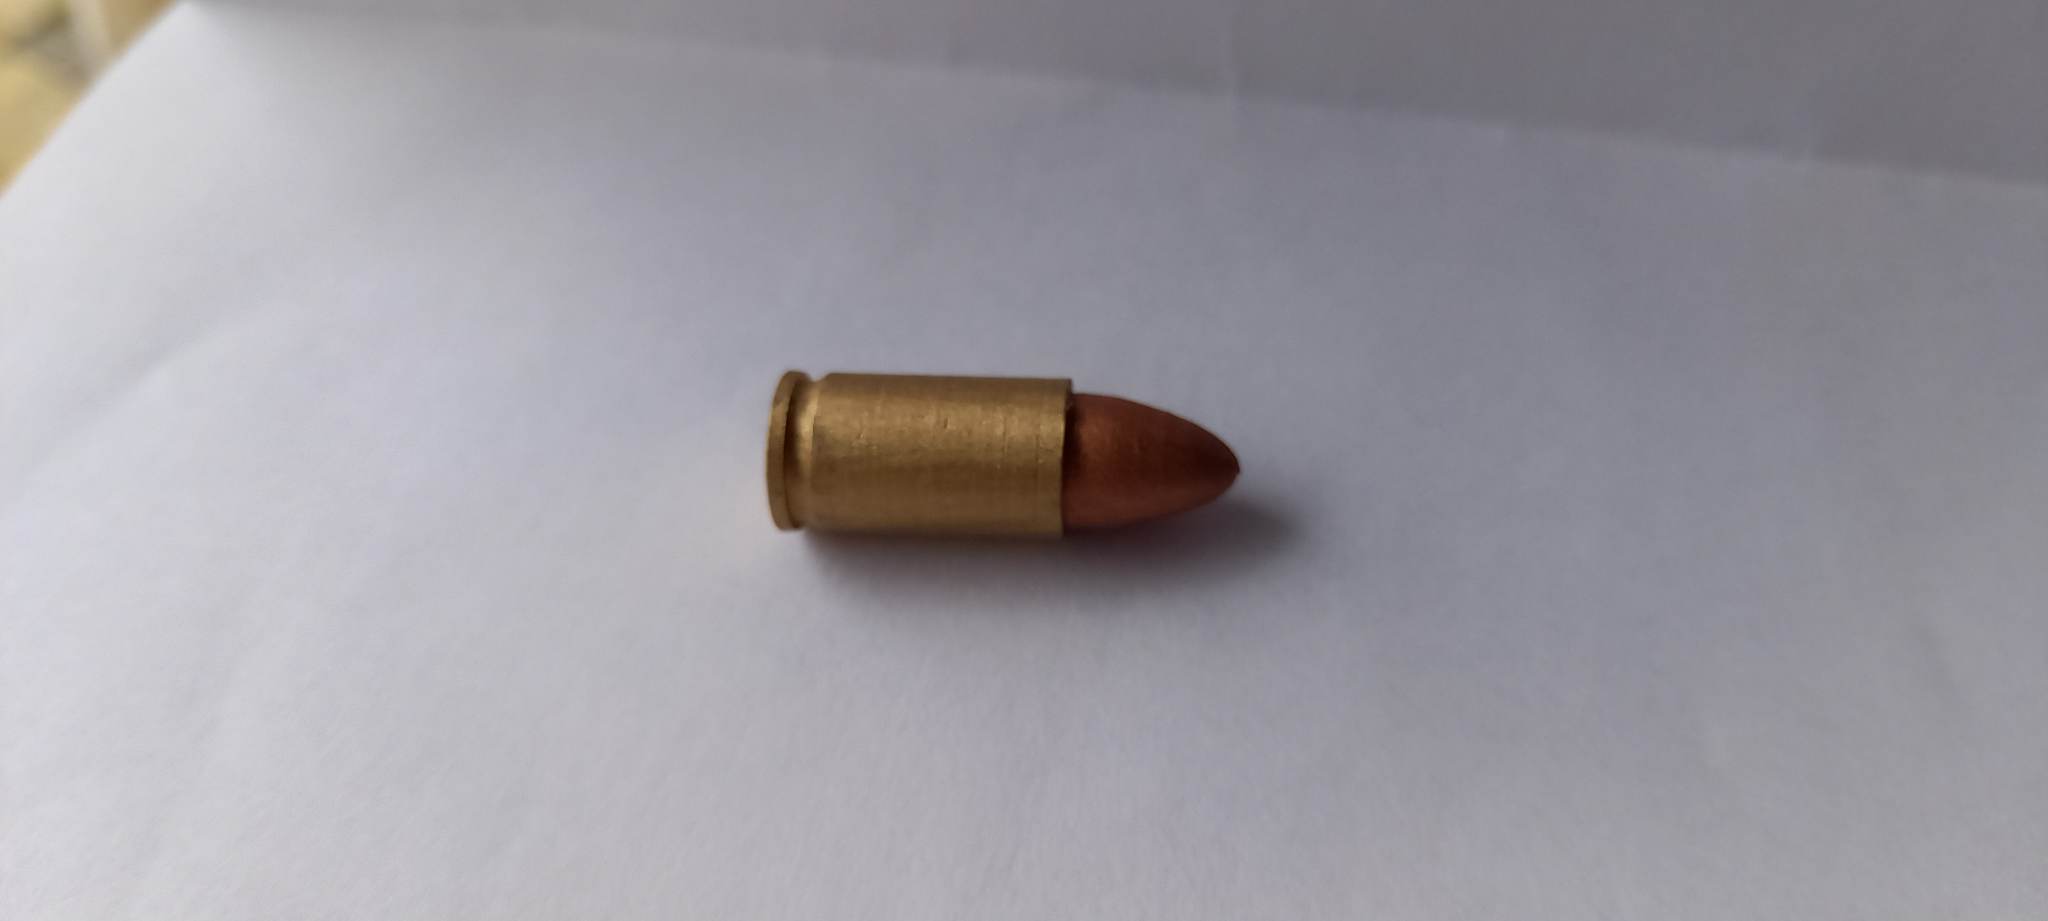 9 mm parabellum bullet two part by Bálint Leon Seregi | Download 